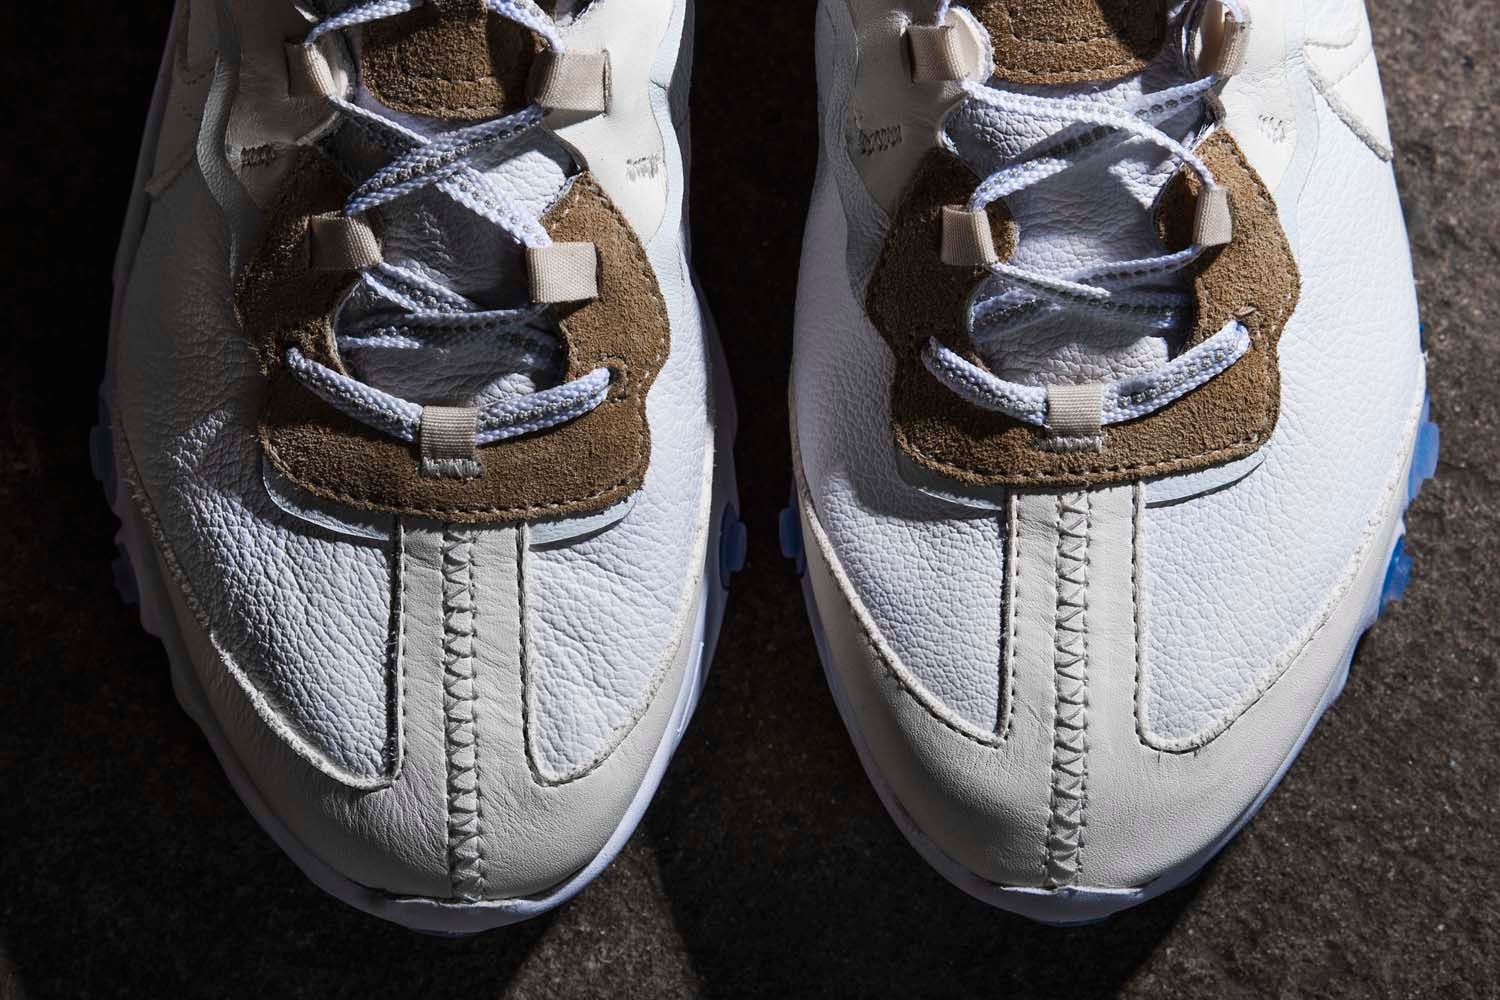 The Shoe Surgeon Nike React 87 Leather Custom Dominic Chambrone Custom Sneakers suede grain july 14 2018 drop release date